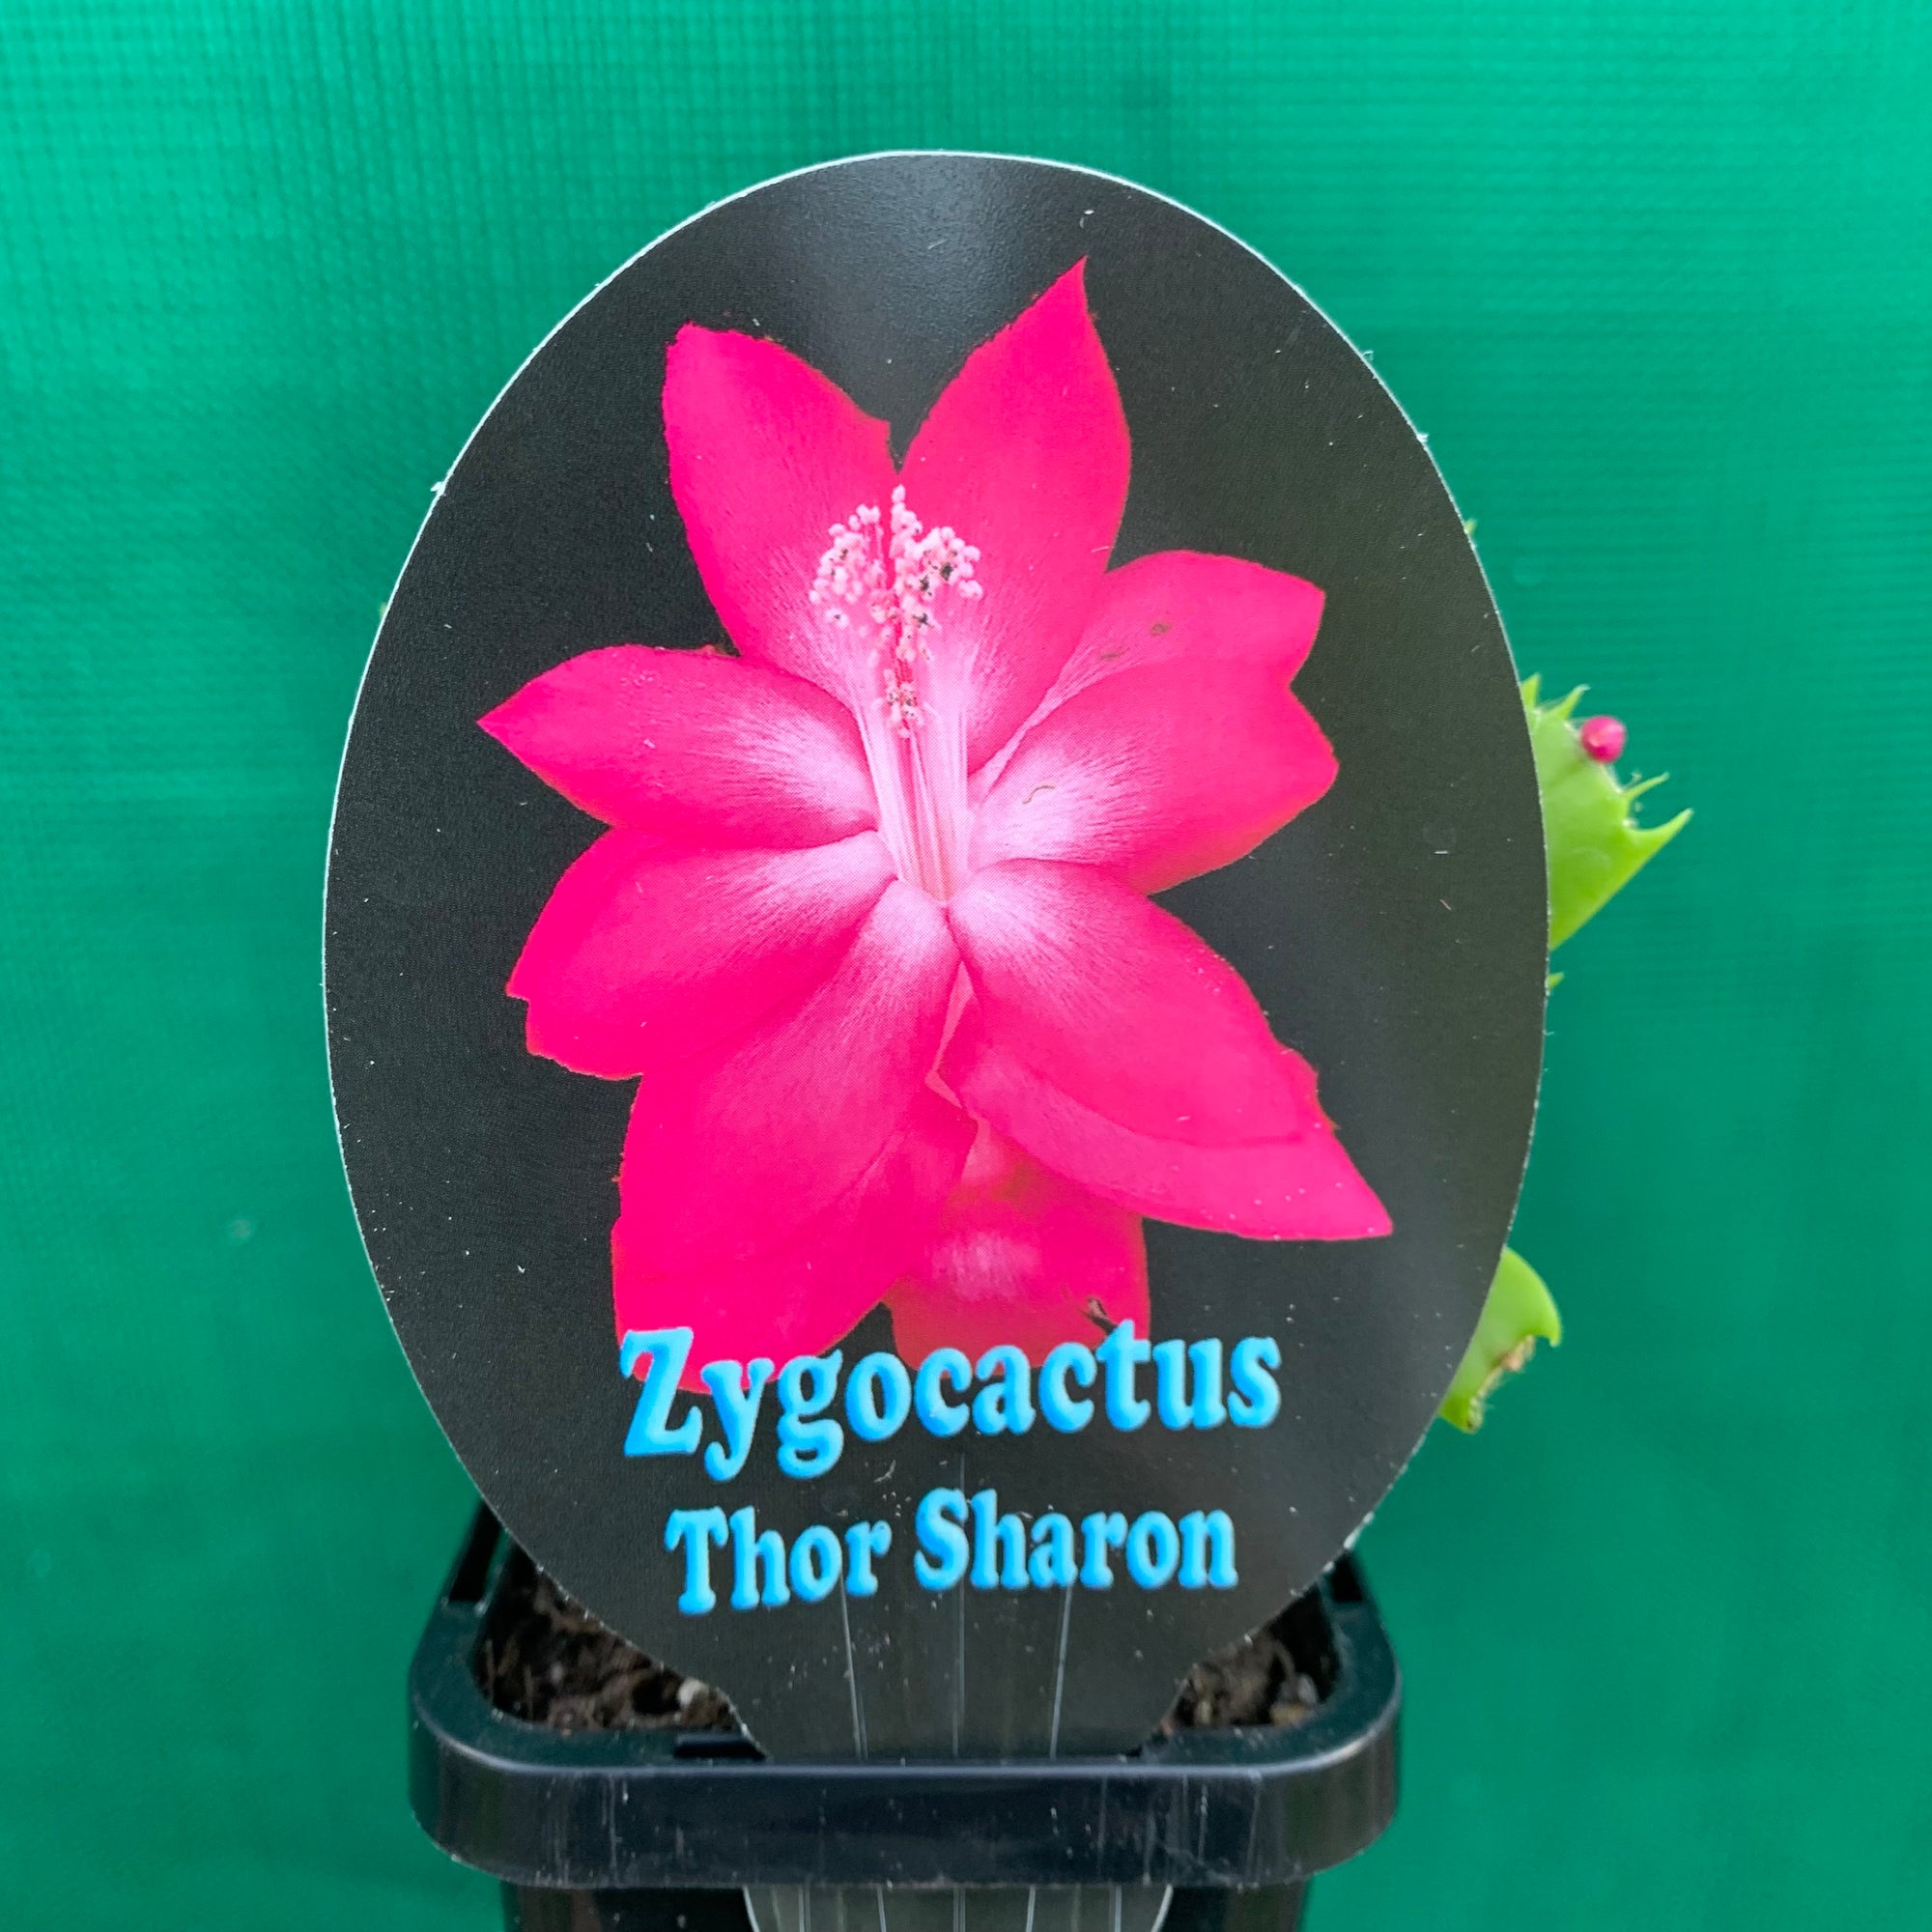 Zygocactus Thor Sharon